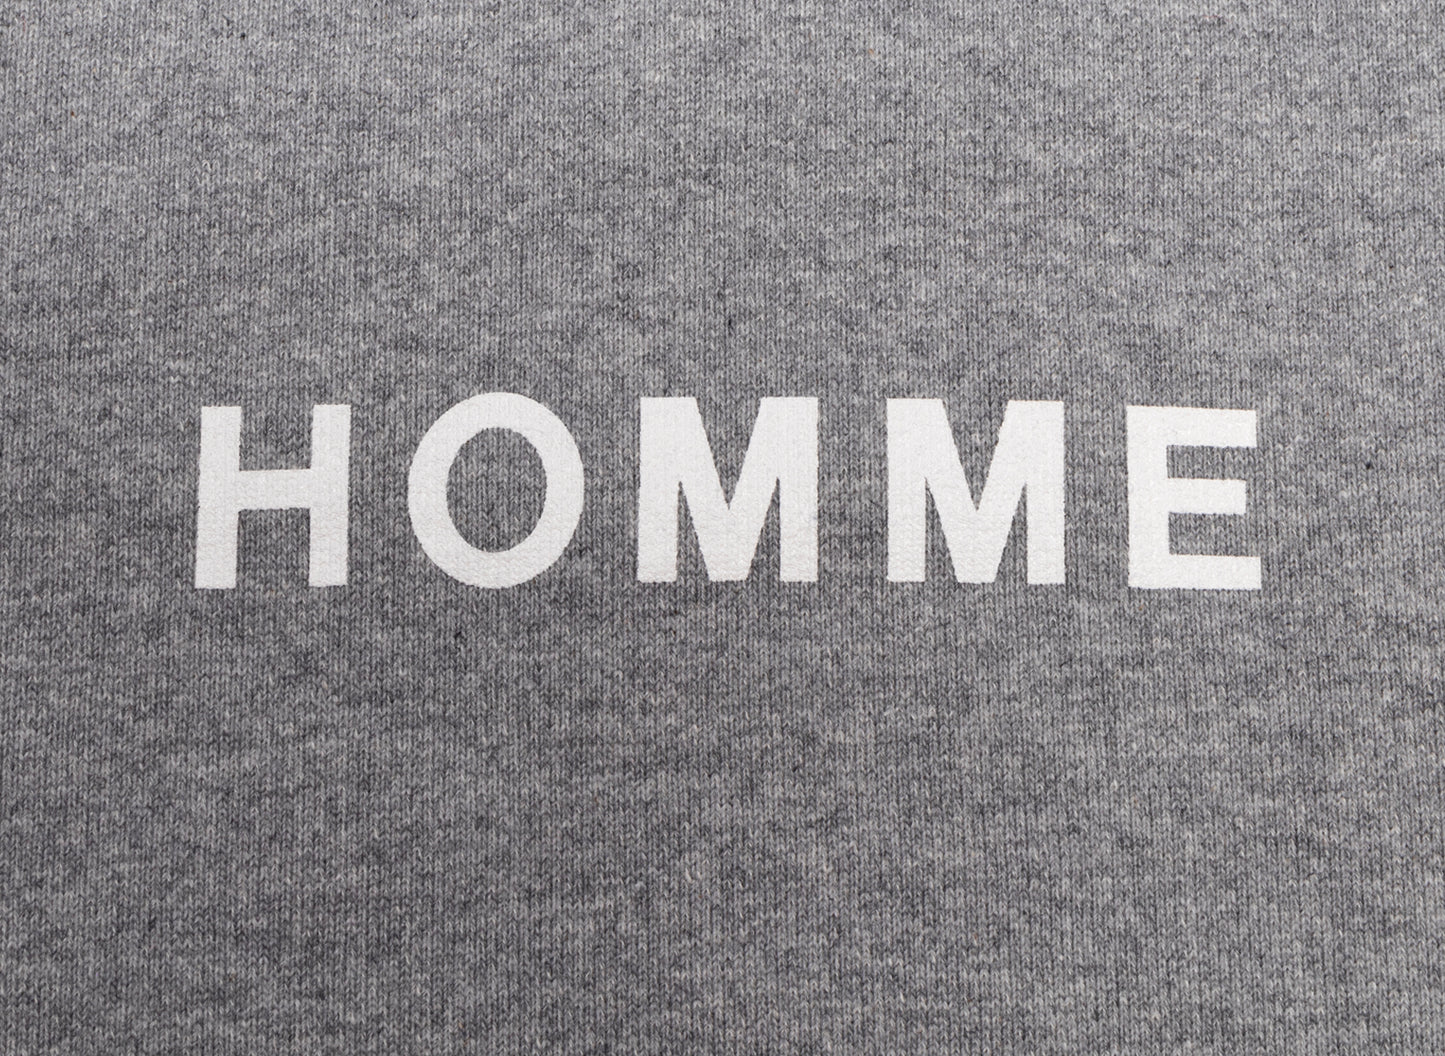 Comme des Garçons HOMME Logo Hoodie in Grey xld